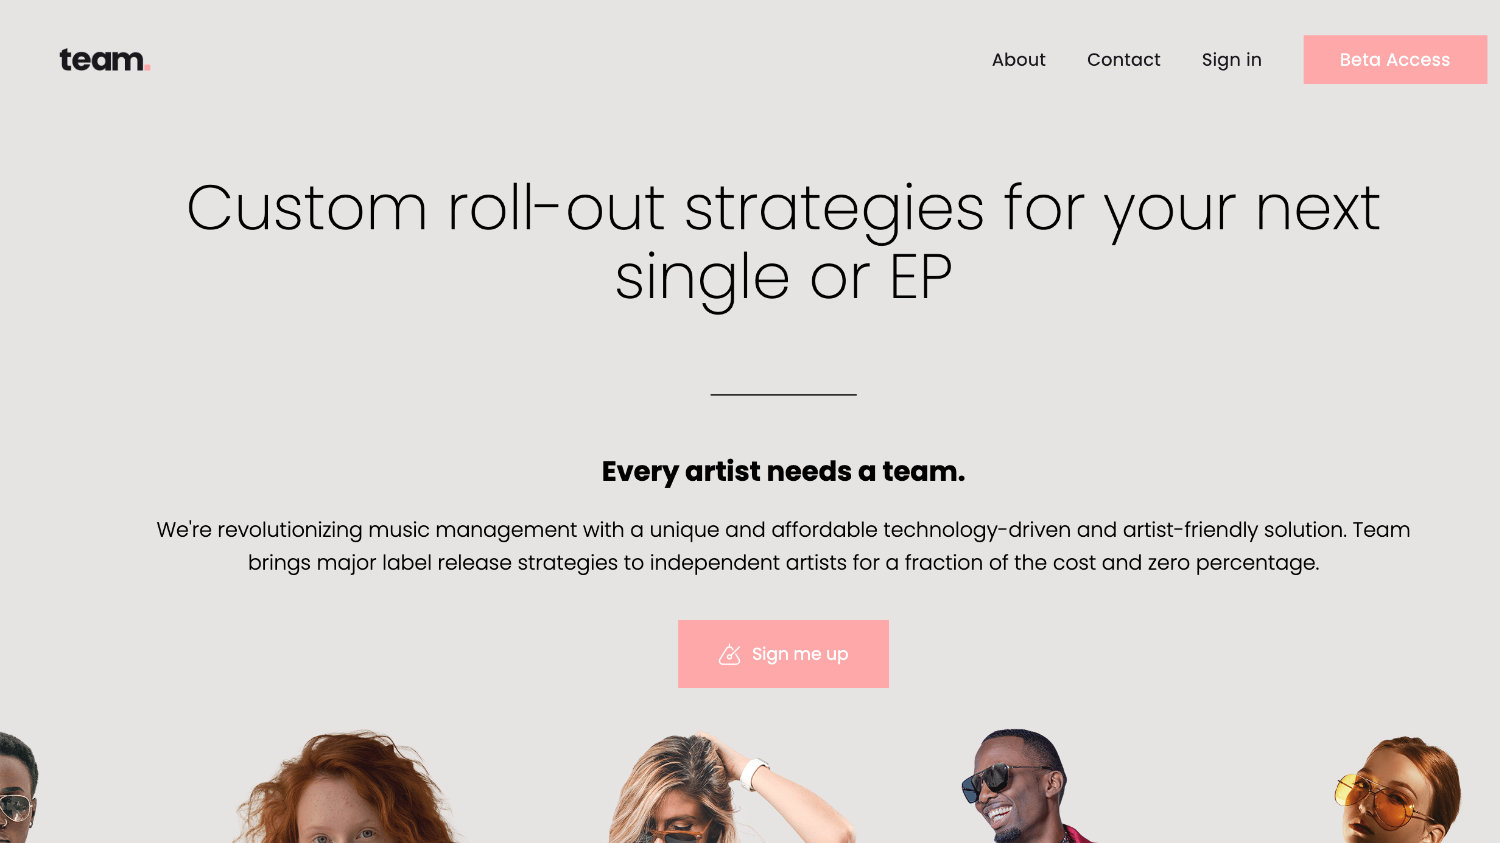 Ubuntu Stories - Team: Accelerating new artist exposure